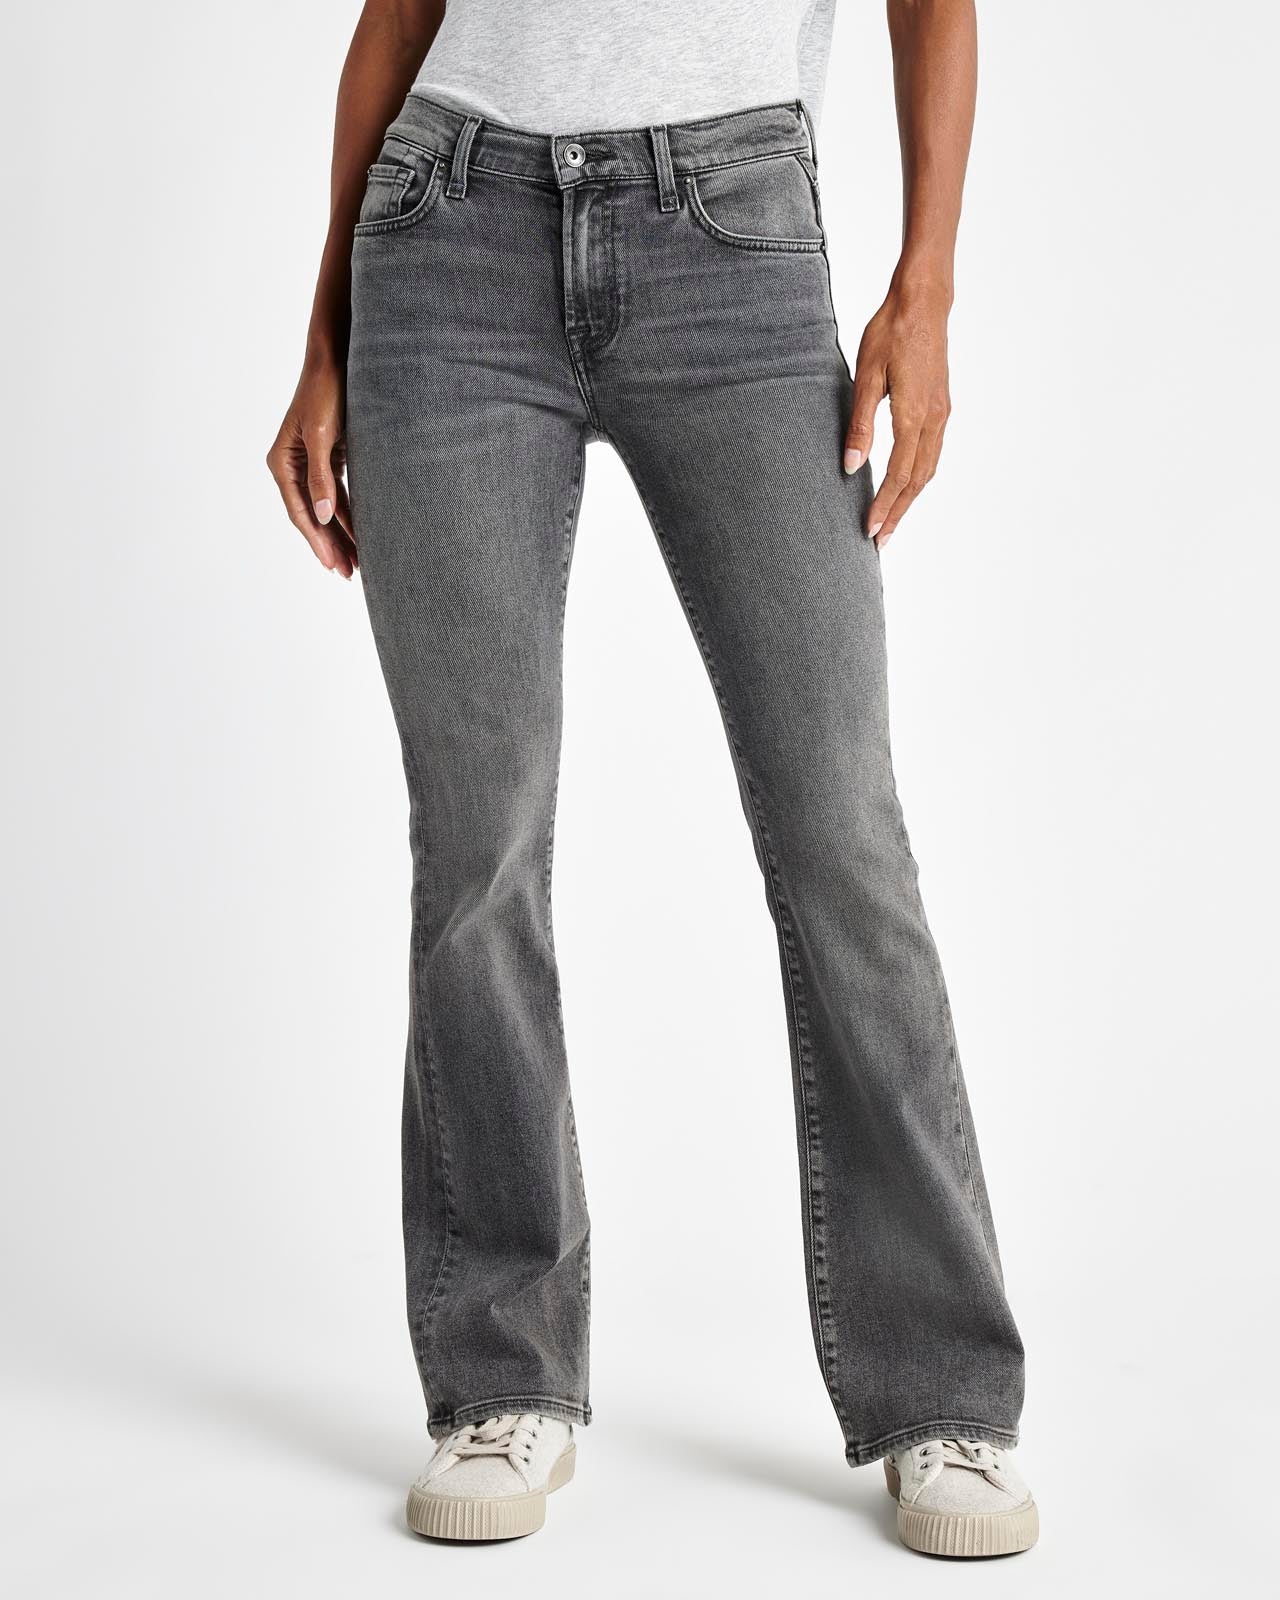 Elegant Black Denim Boot Cut Jeans For Women at Rs 687.00, Boot Cut Jeans